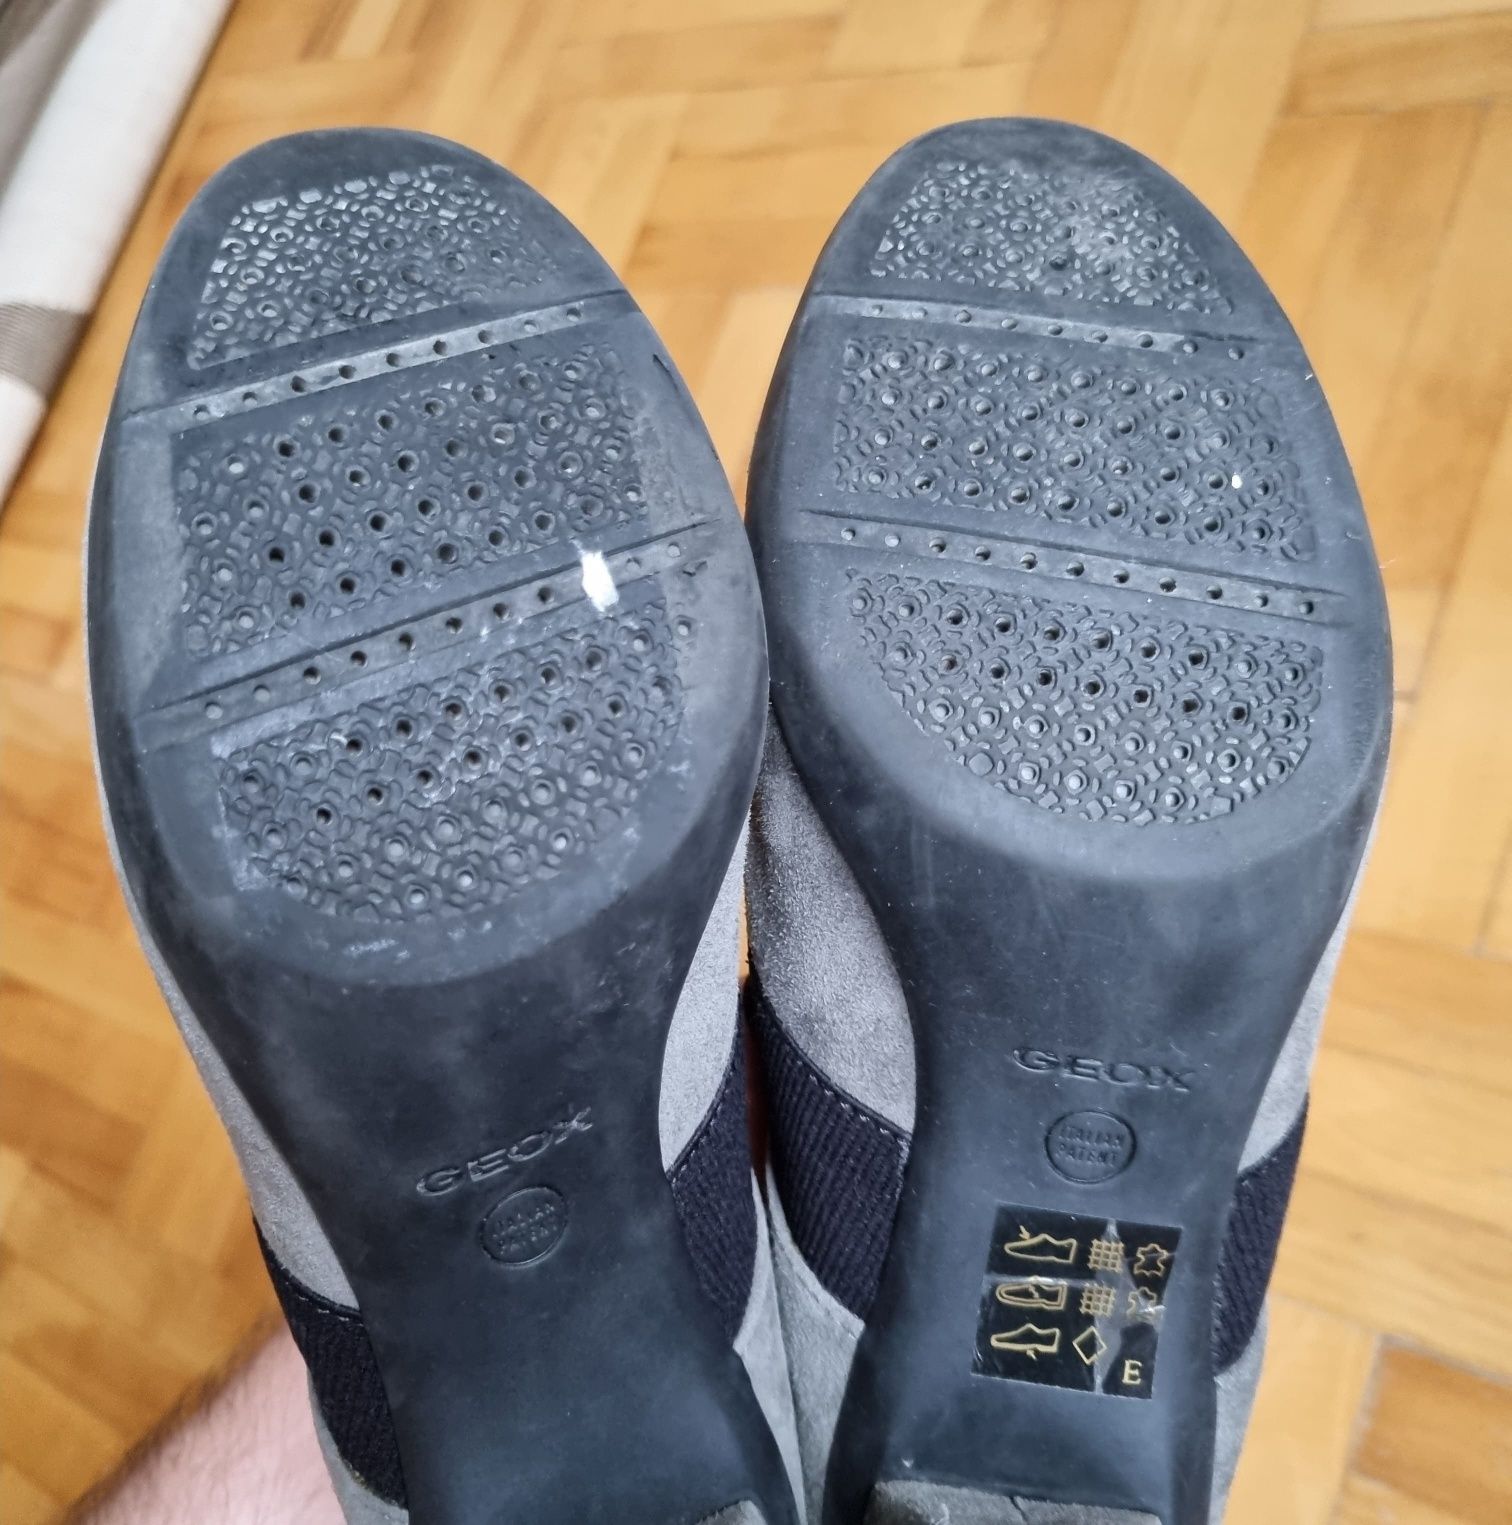 Pantofi/botine Geox piele naturala intoarsa nr 36